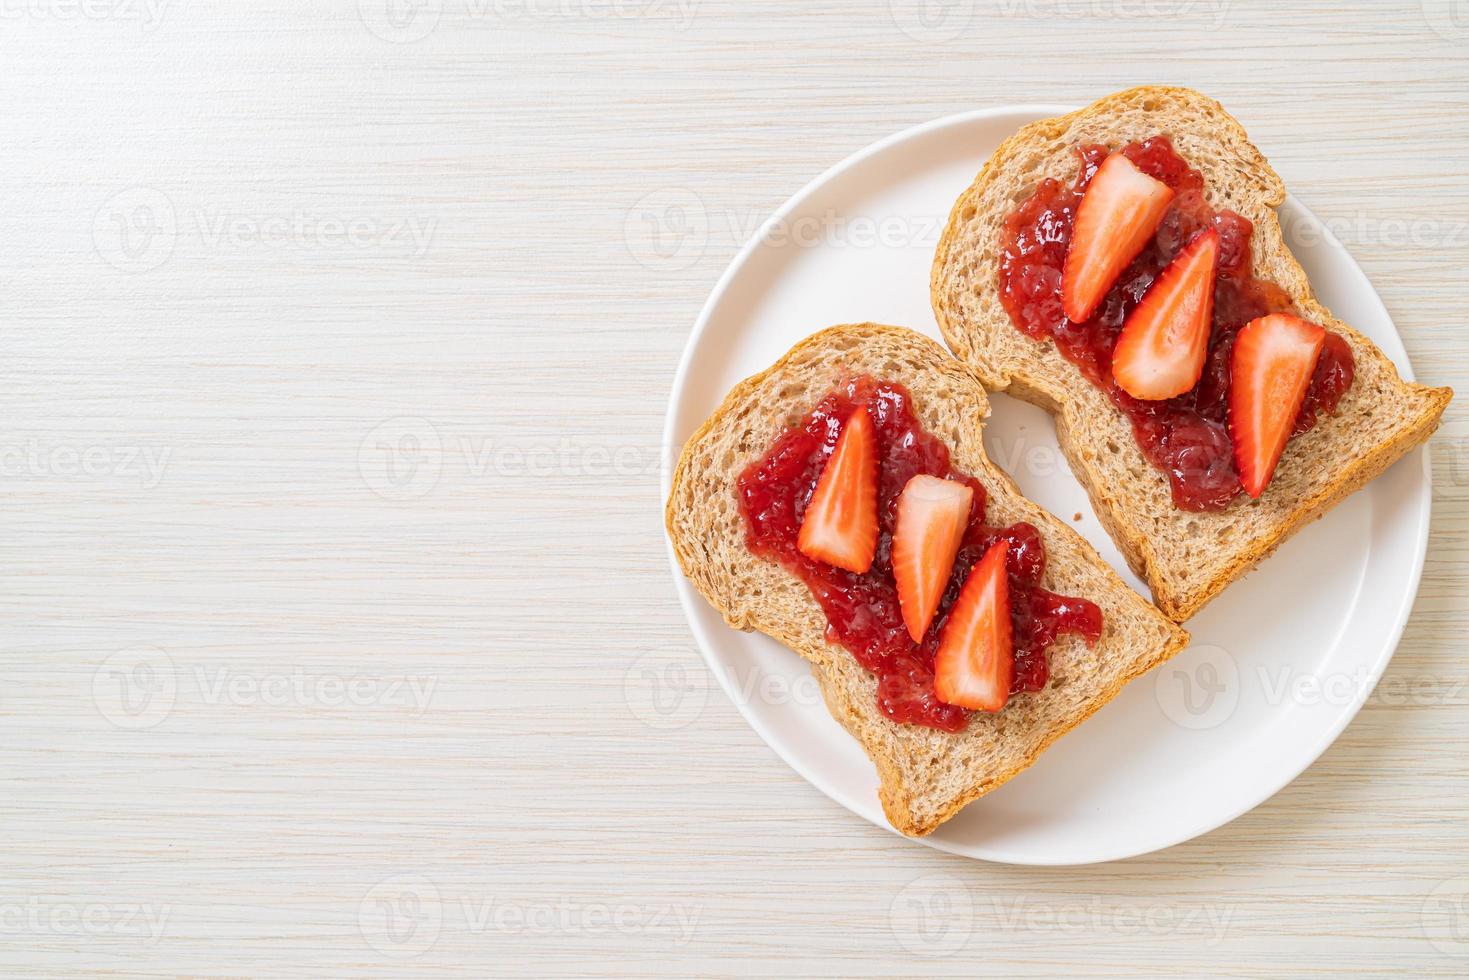 pan integral casero con mermelada de fresa y fresa fresca foto